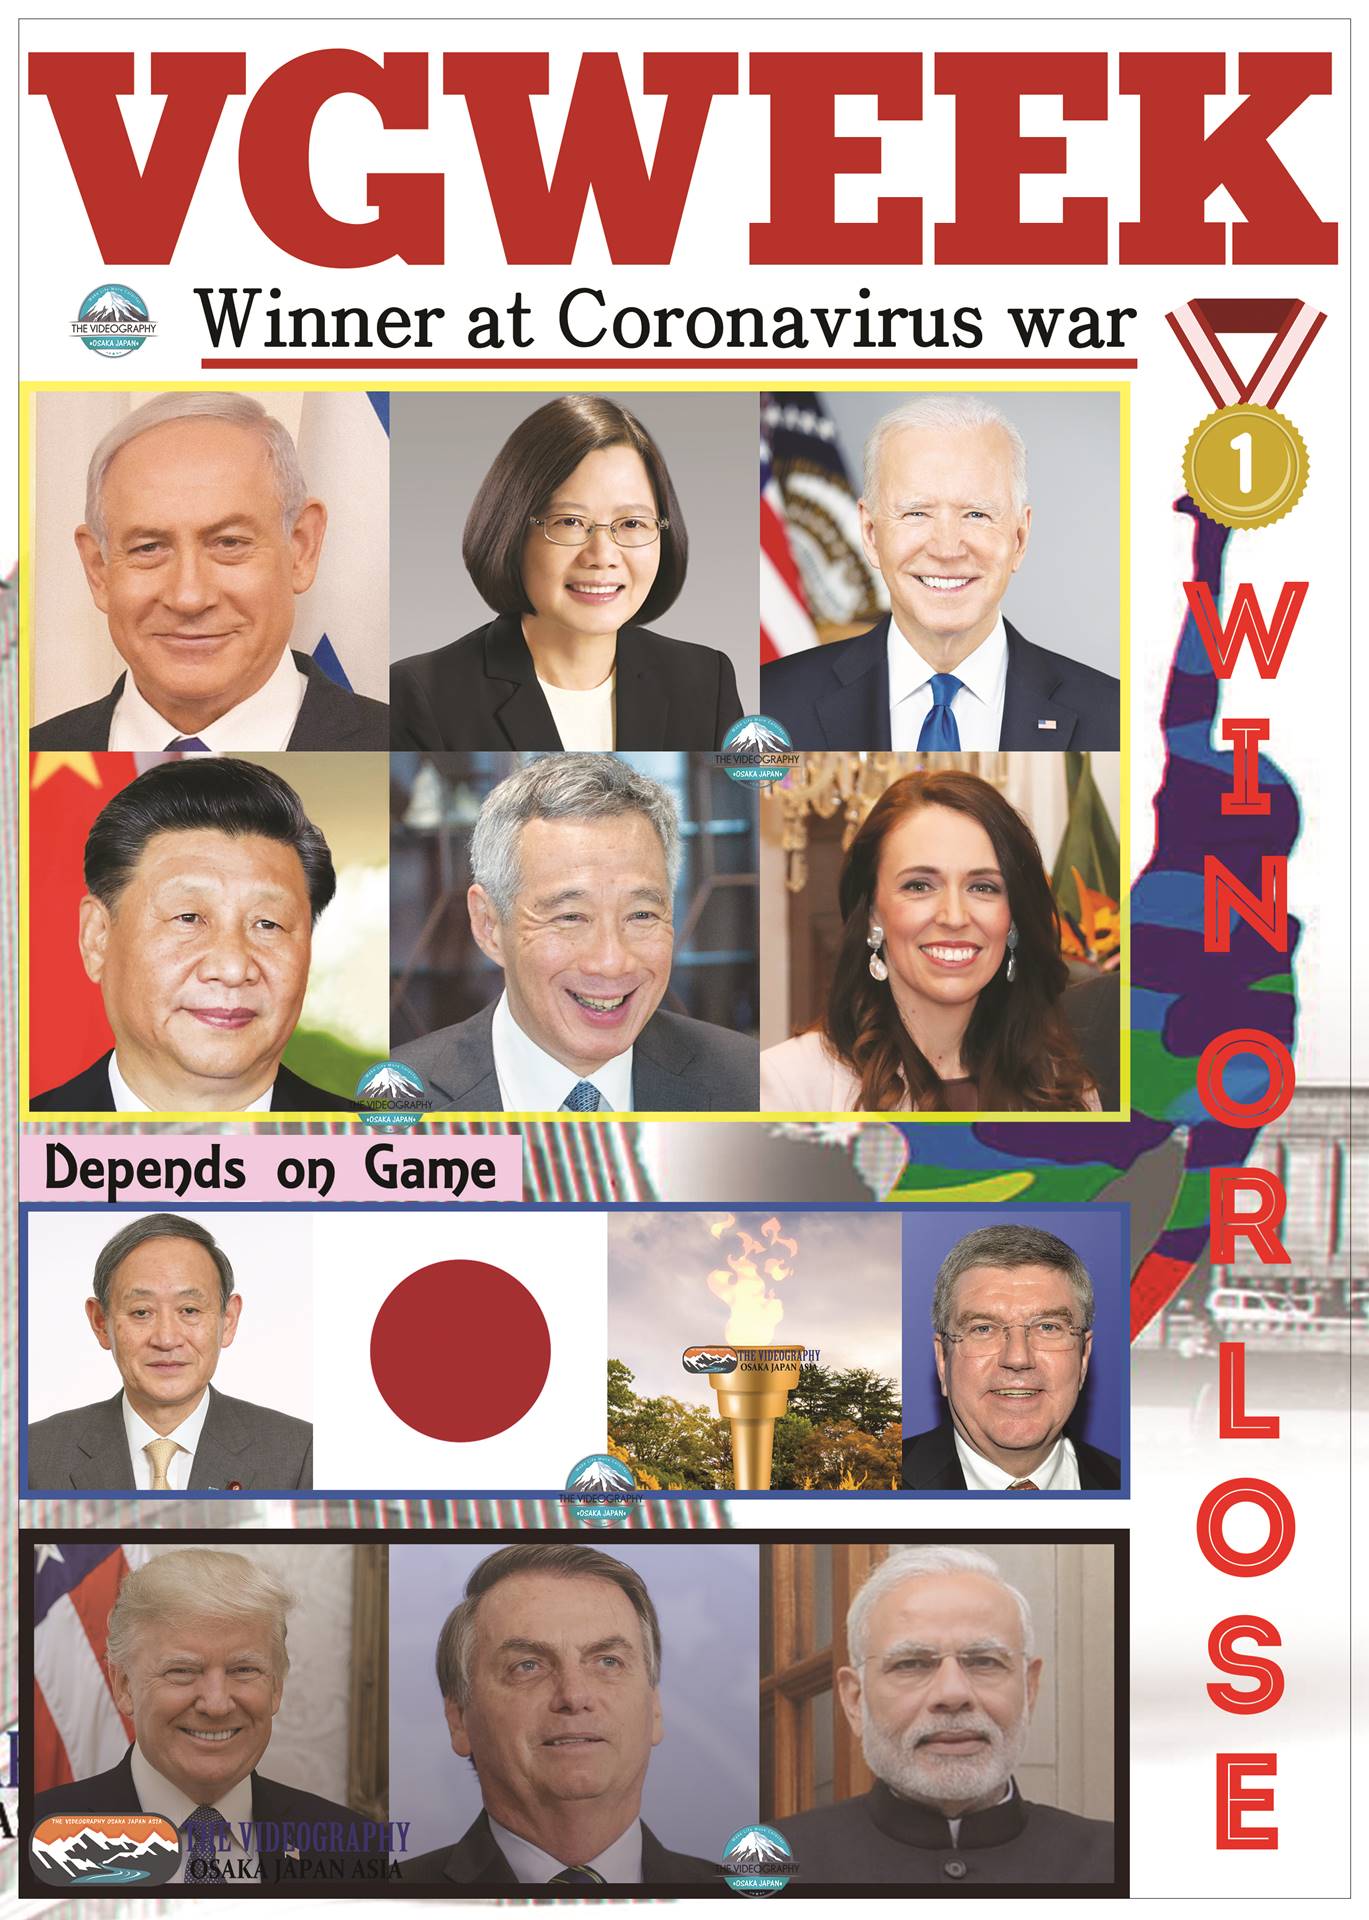 Win against Corona War・コロナ時代の勝者 ニューズウィーク風表紙 Newsweek style Cover. 第一次湾岸戦争の勝者と敗者を表現した雑誌 ニューズウィーク風表紙・パロディカバー